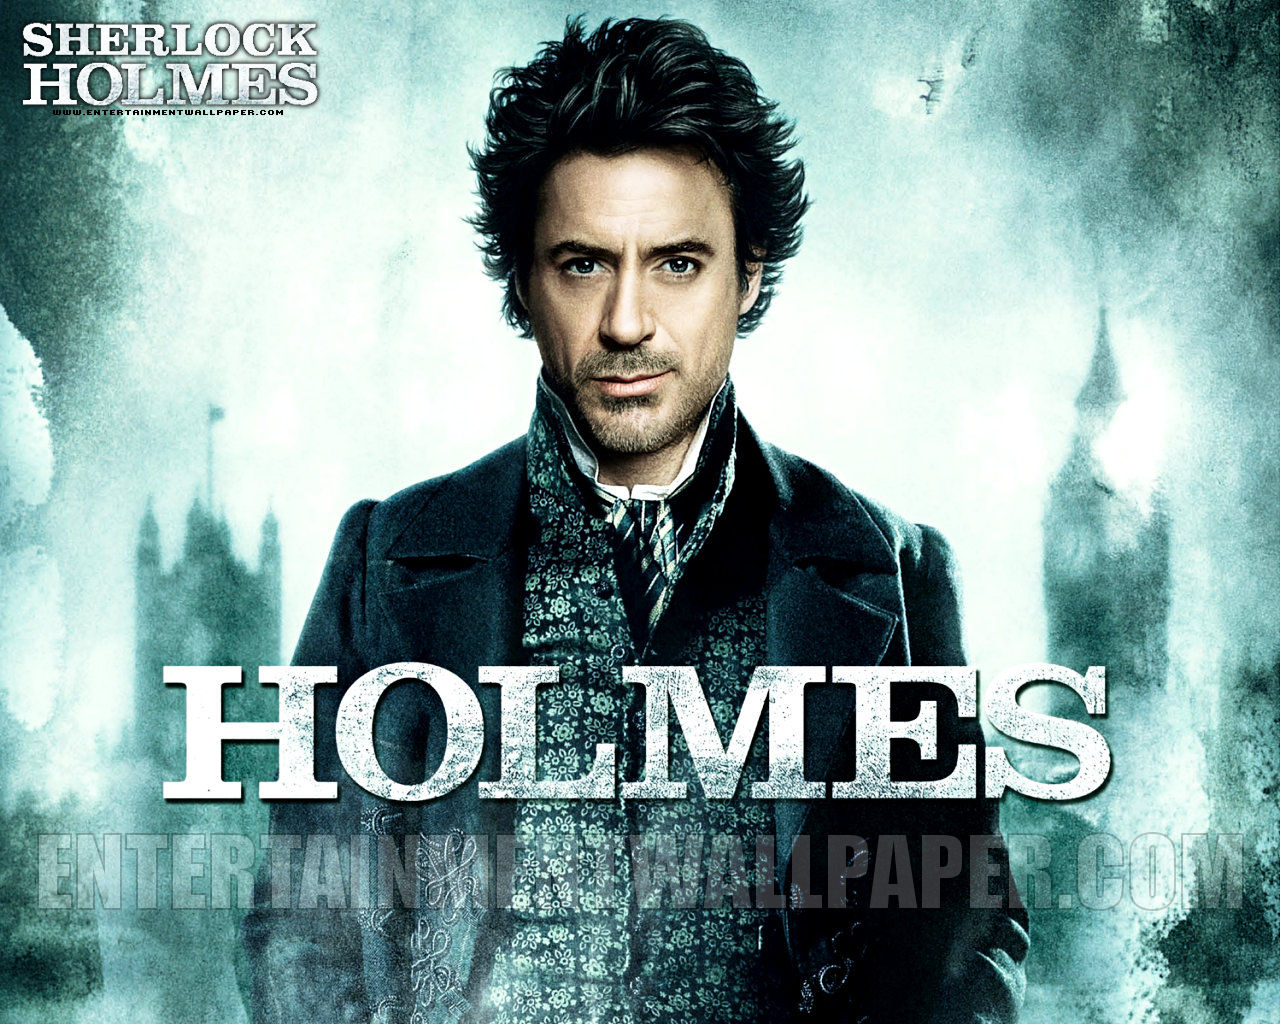 Sherlock Holmes Robert Downey Jr.